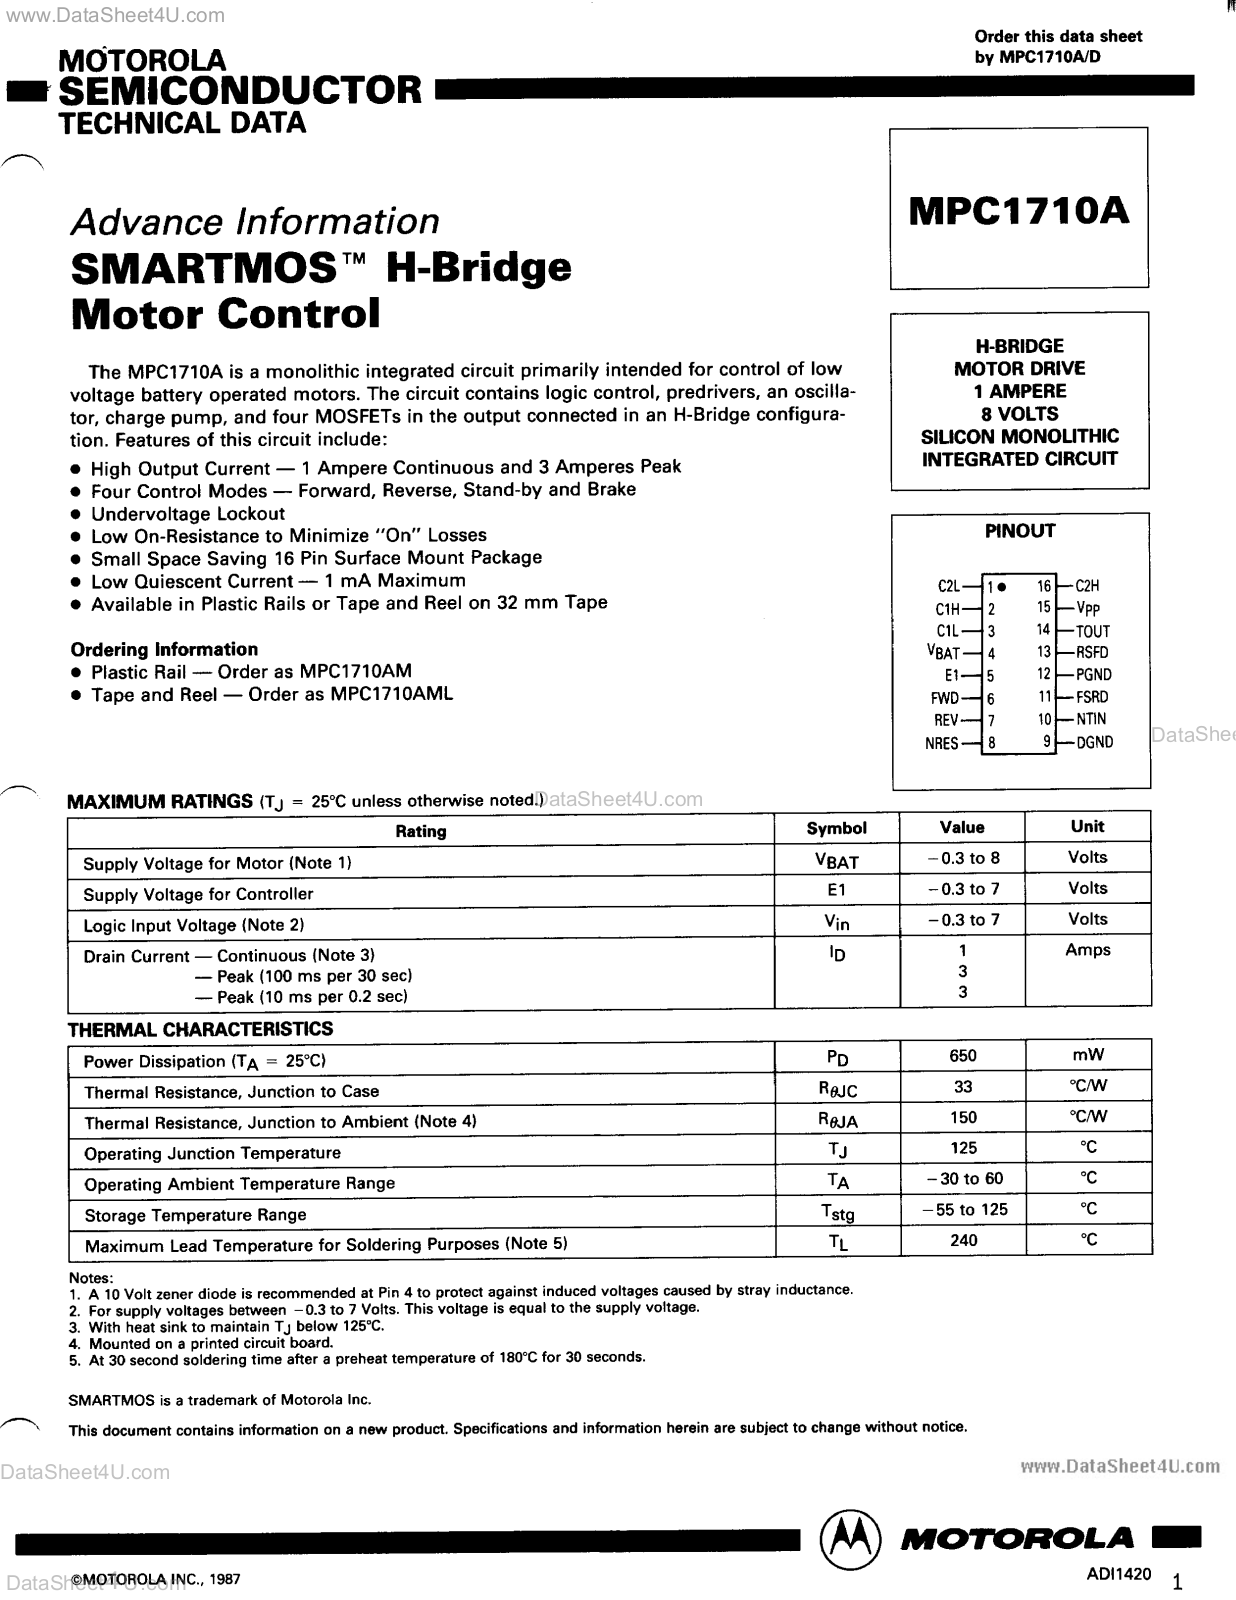 MOTOROLA MPC1710A Technical data